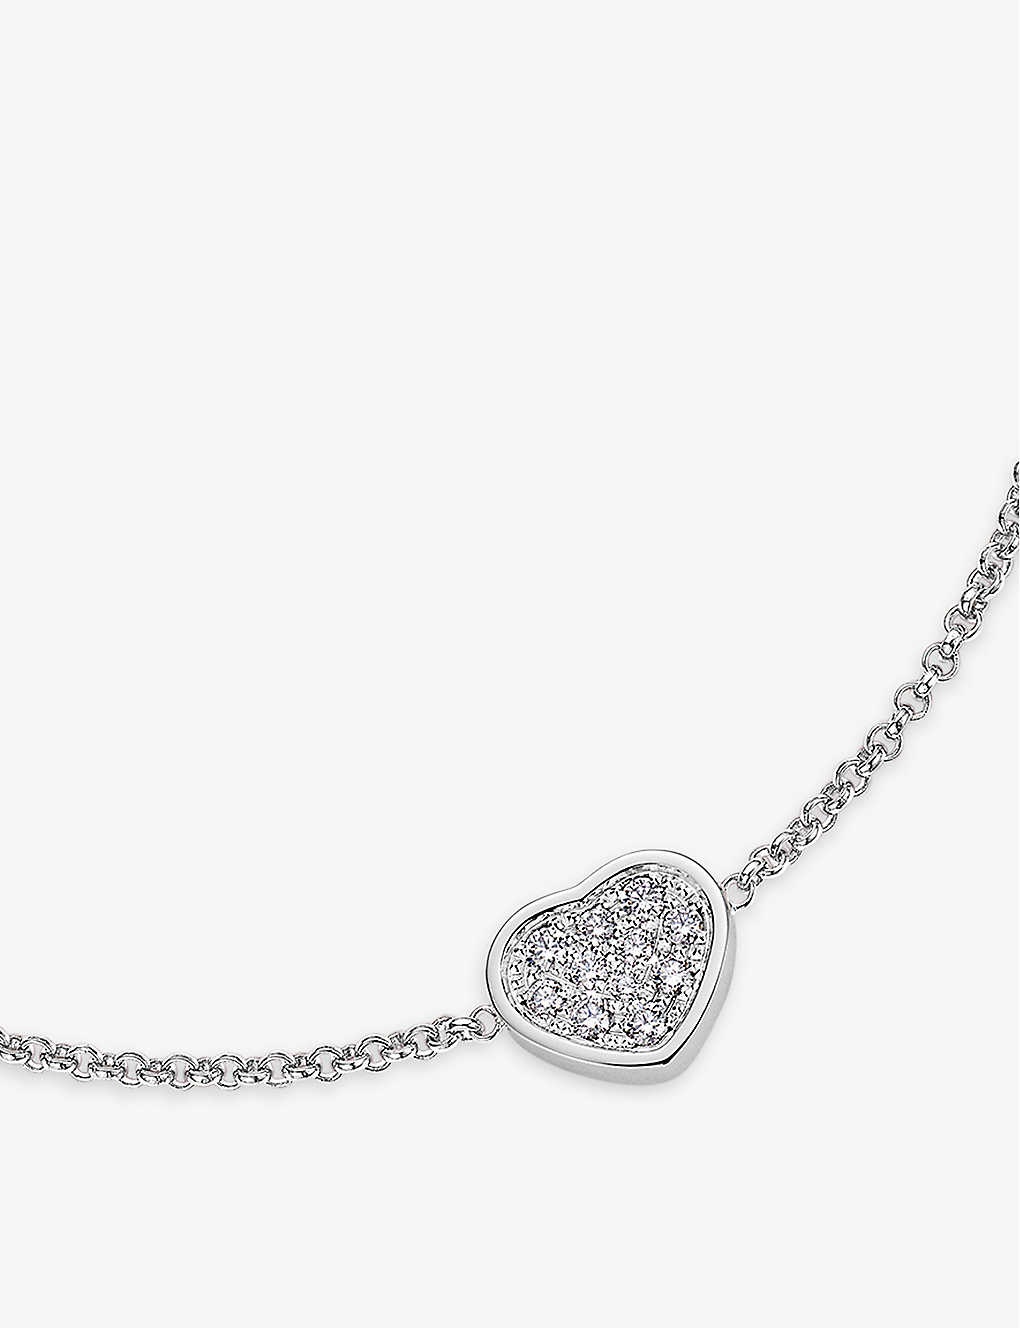 My Happy Hearts 18ct white-gold and 0.12ct brilliant-cut diamond bracelet - 1